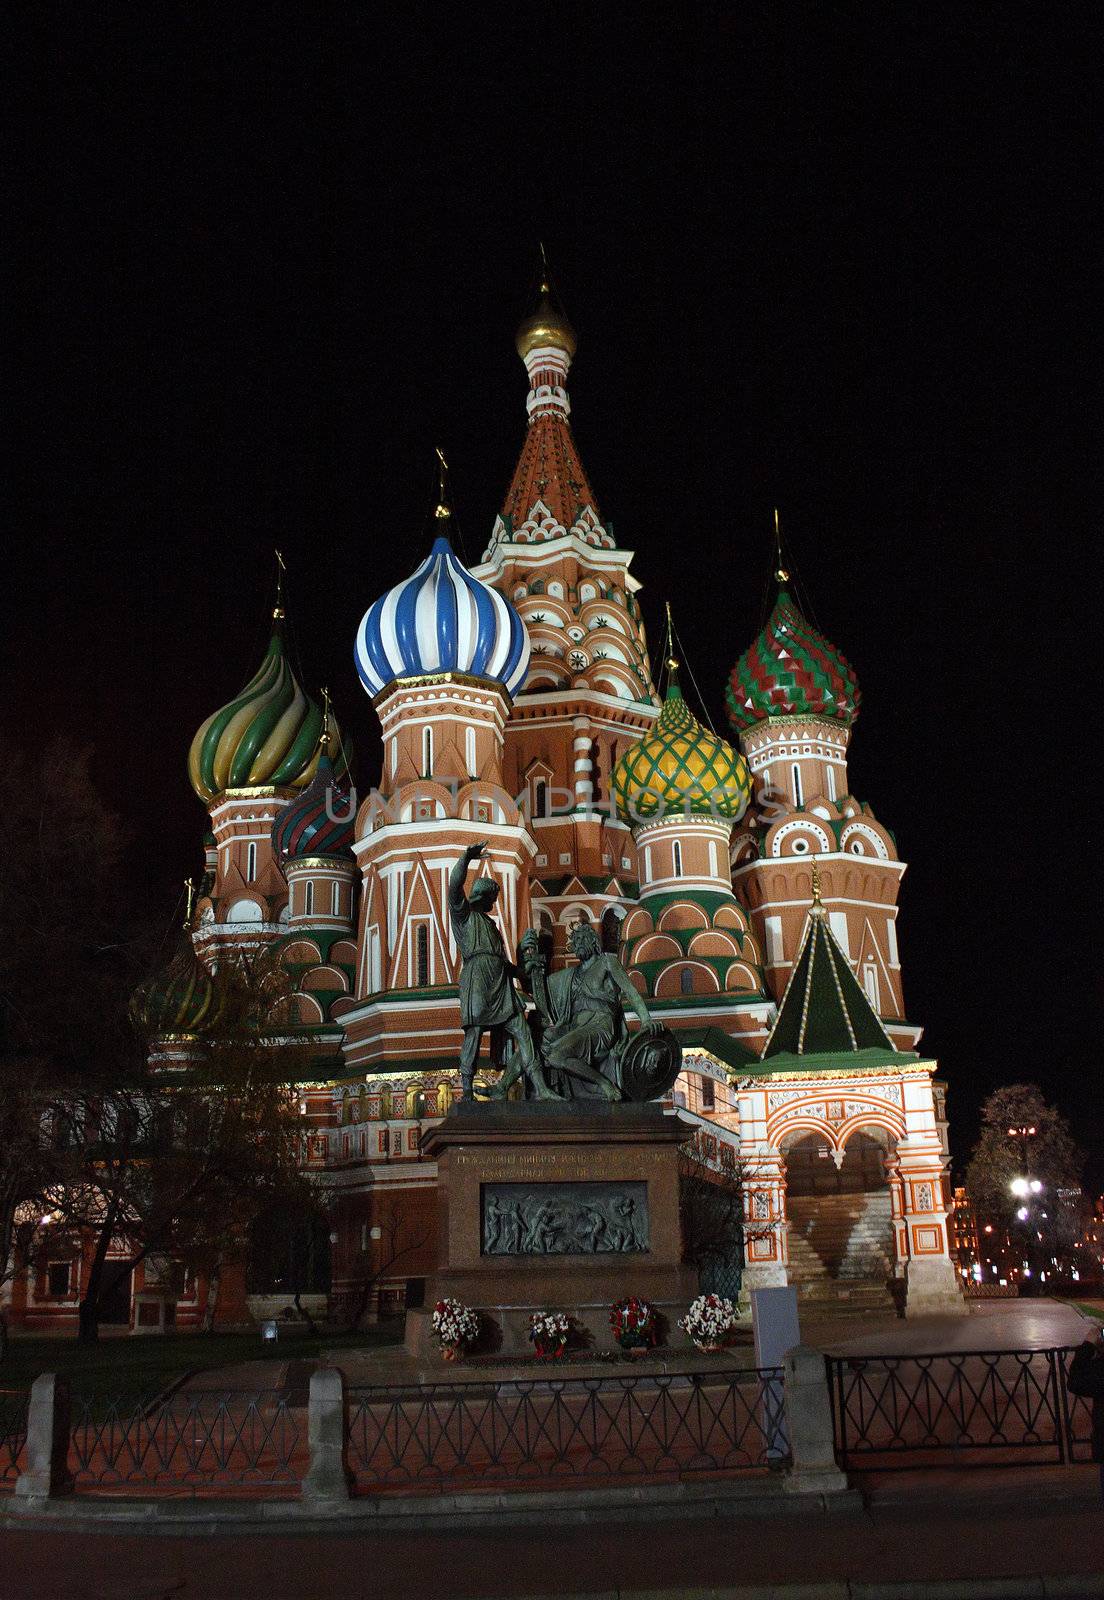 Vasiliy Blazhenniy church on red square in Moscow, night